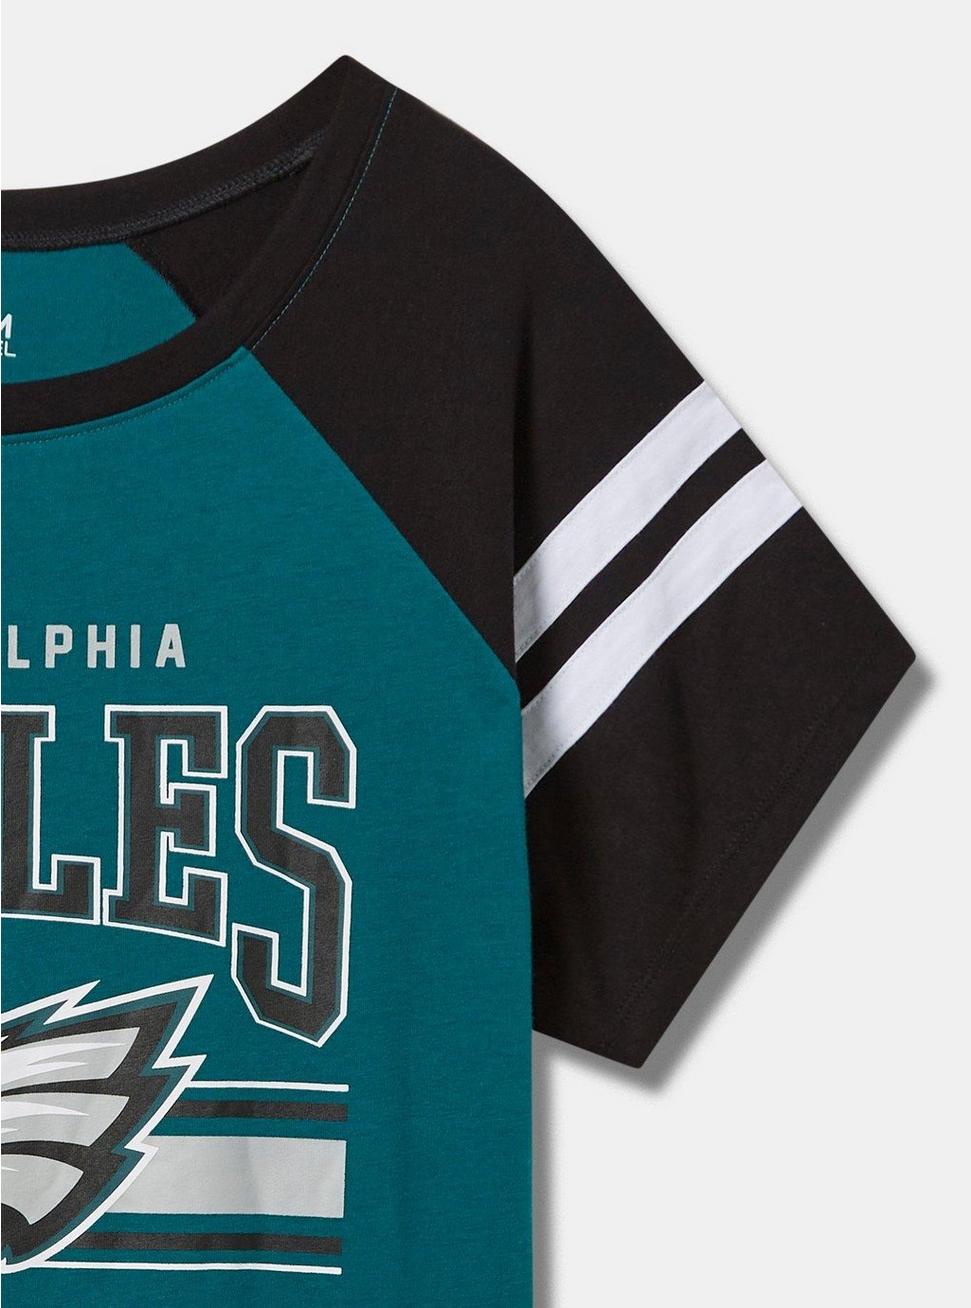 4x philadelphia eagles jersey